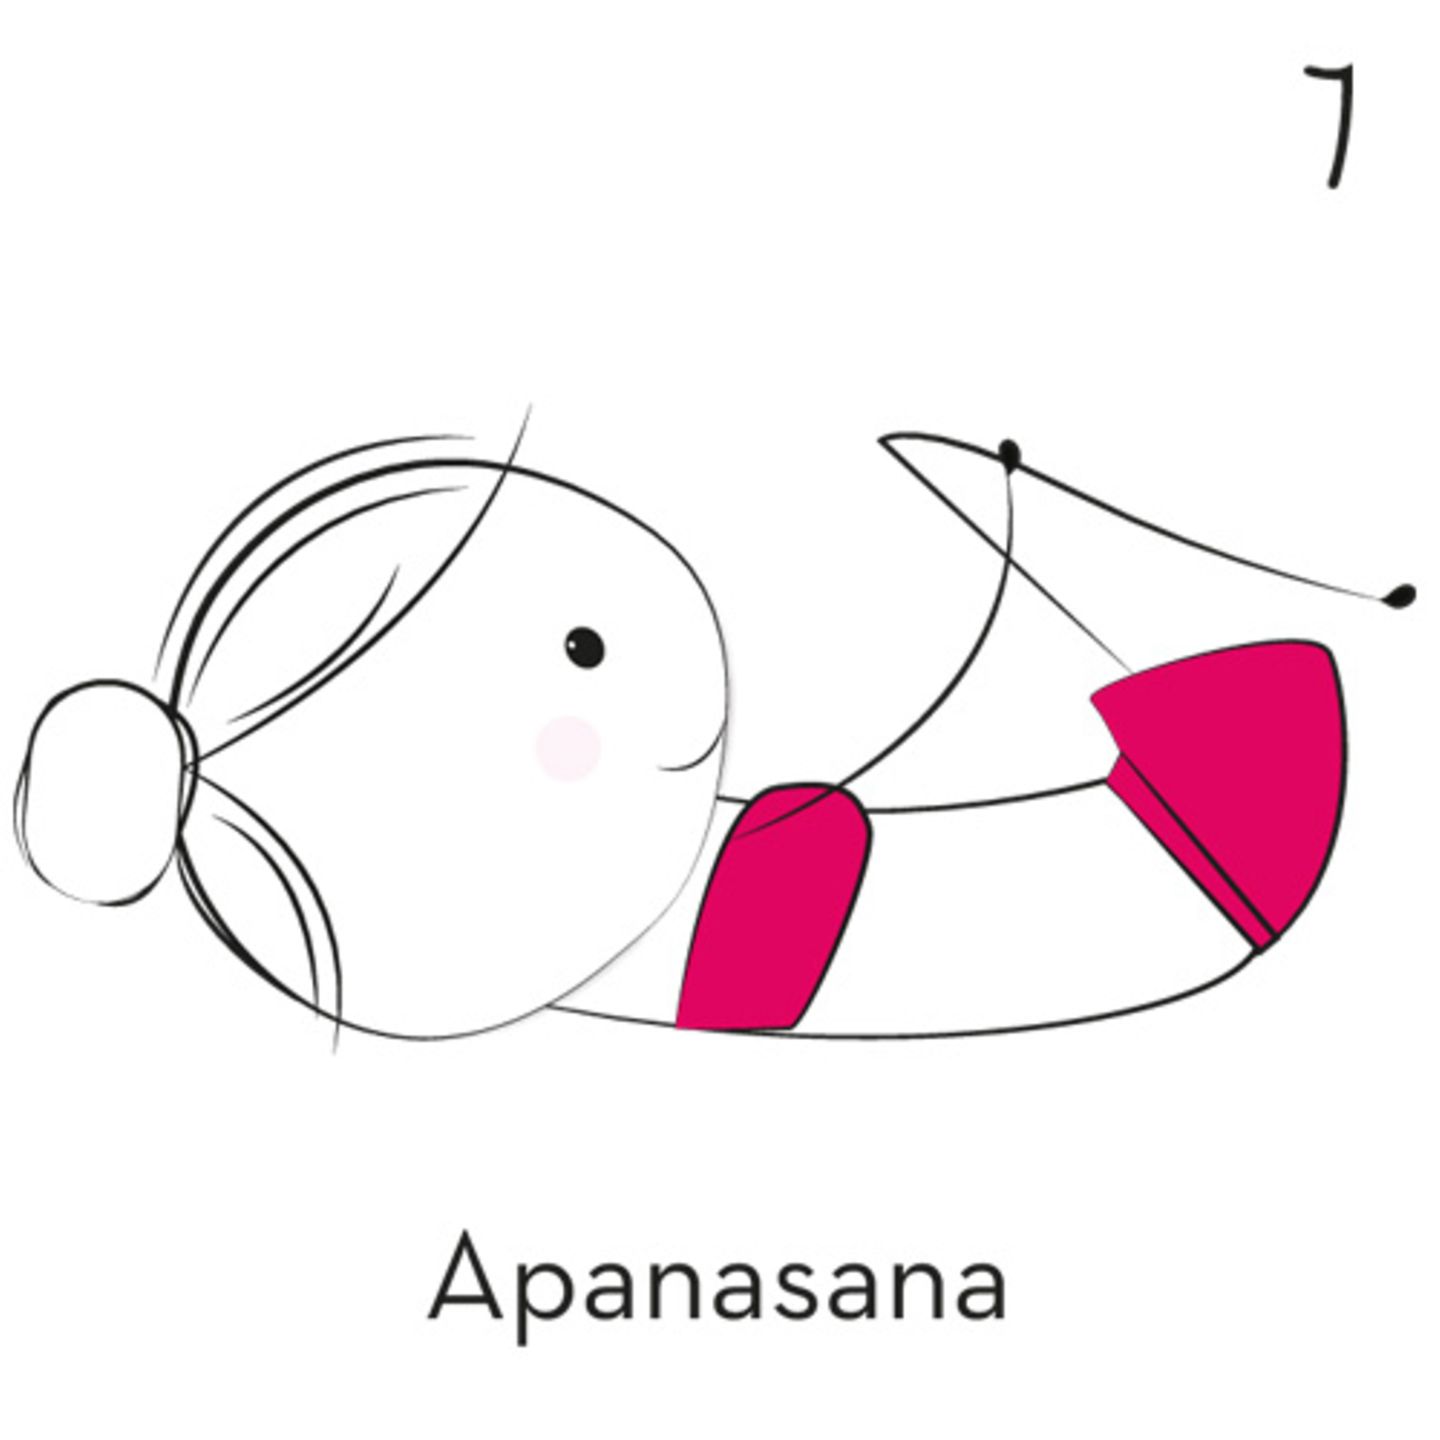 7) Apanasana (Knie zum Brustkorb, liegend)